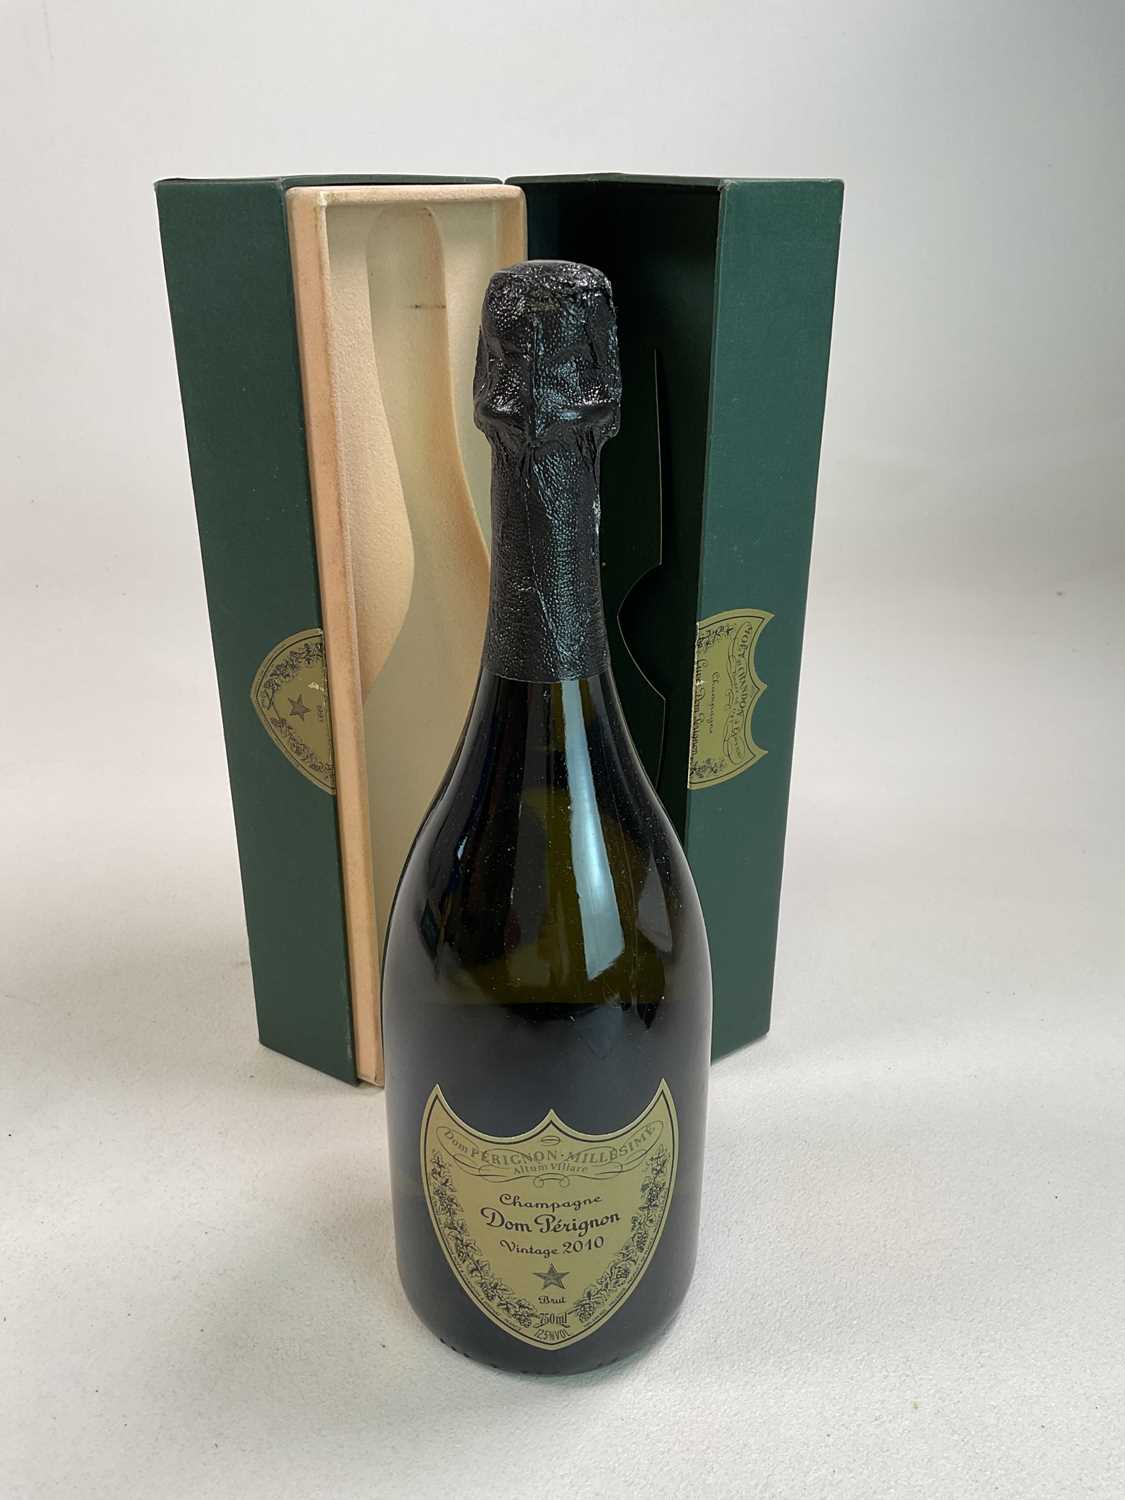 CHAMPAGNE; a bottle of Dom Perignon 2010 Champagne, in associated 1993 box.